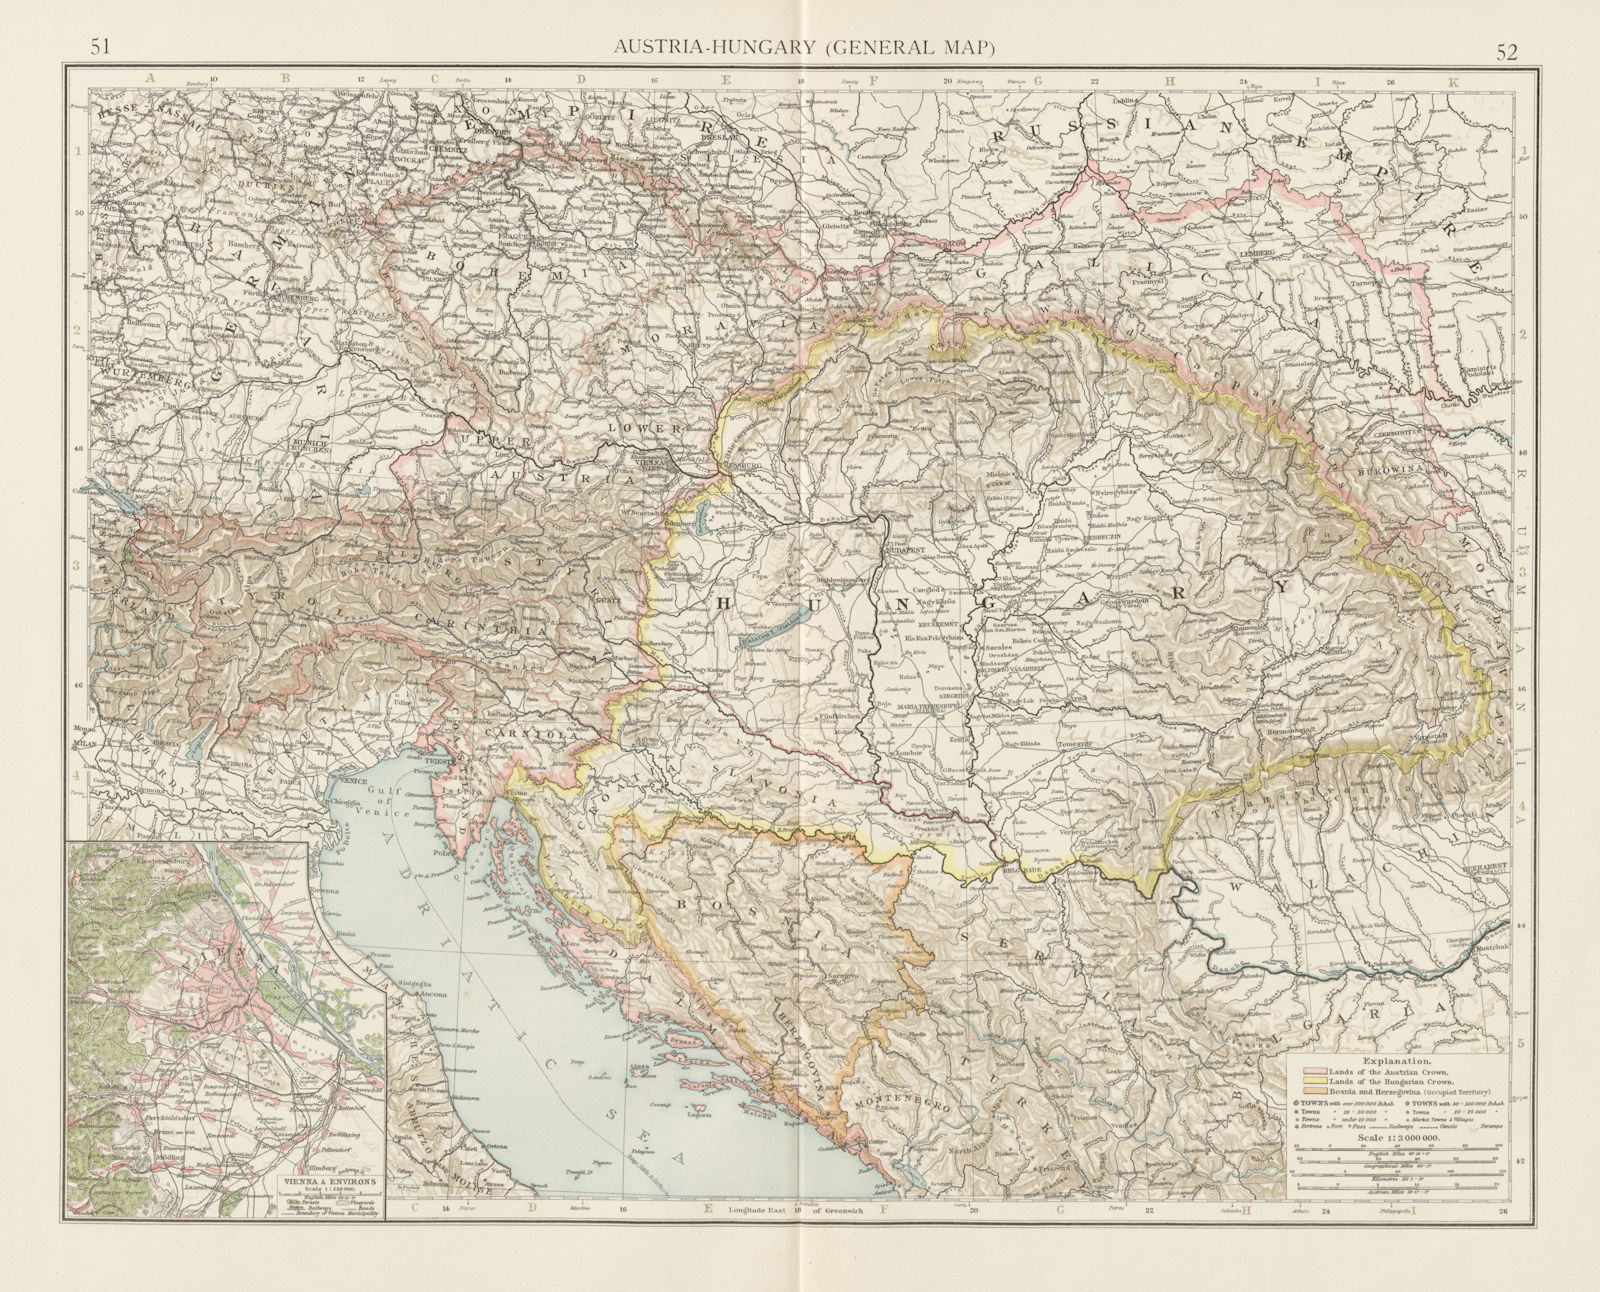 Associate Product Austria-Hungary. Czechia Croatia Bosnia Serbia. Vienna environs. TIMES 1900 map